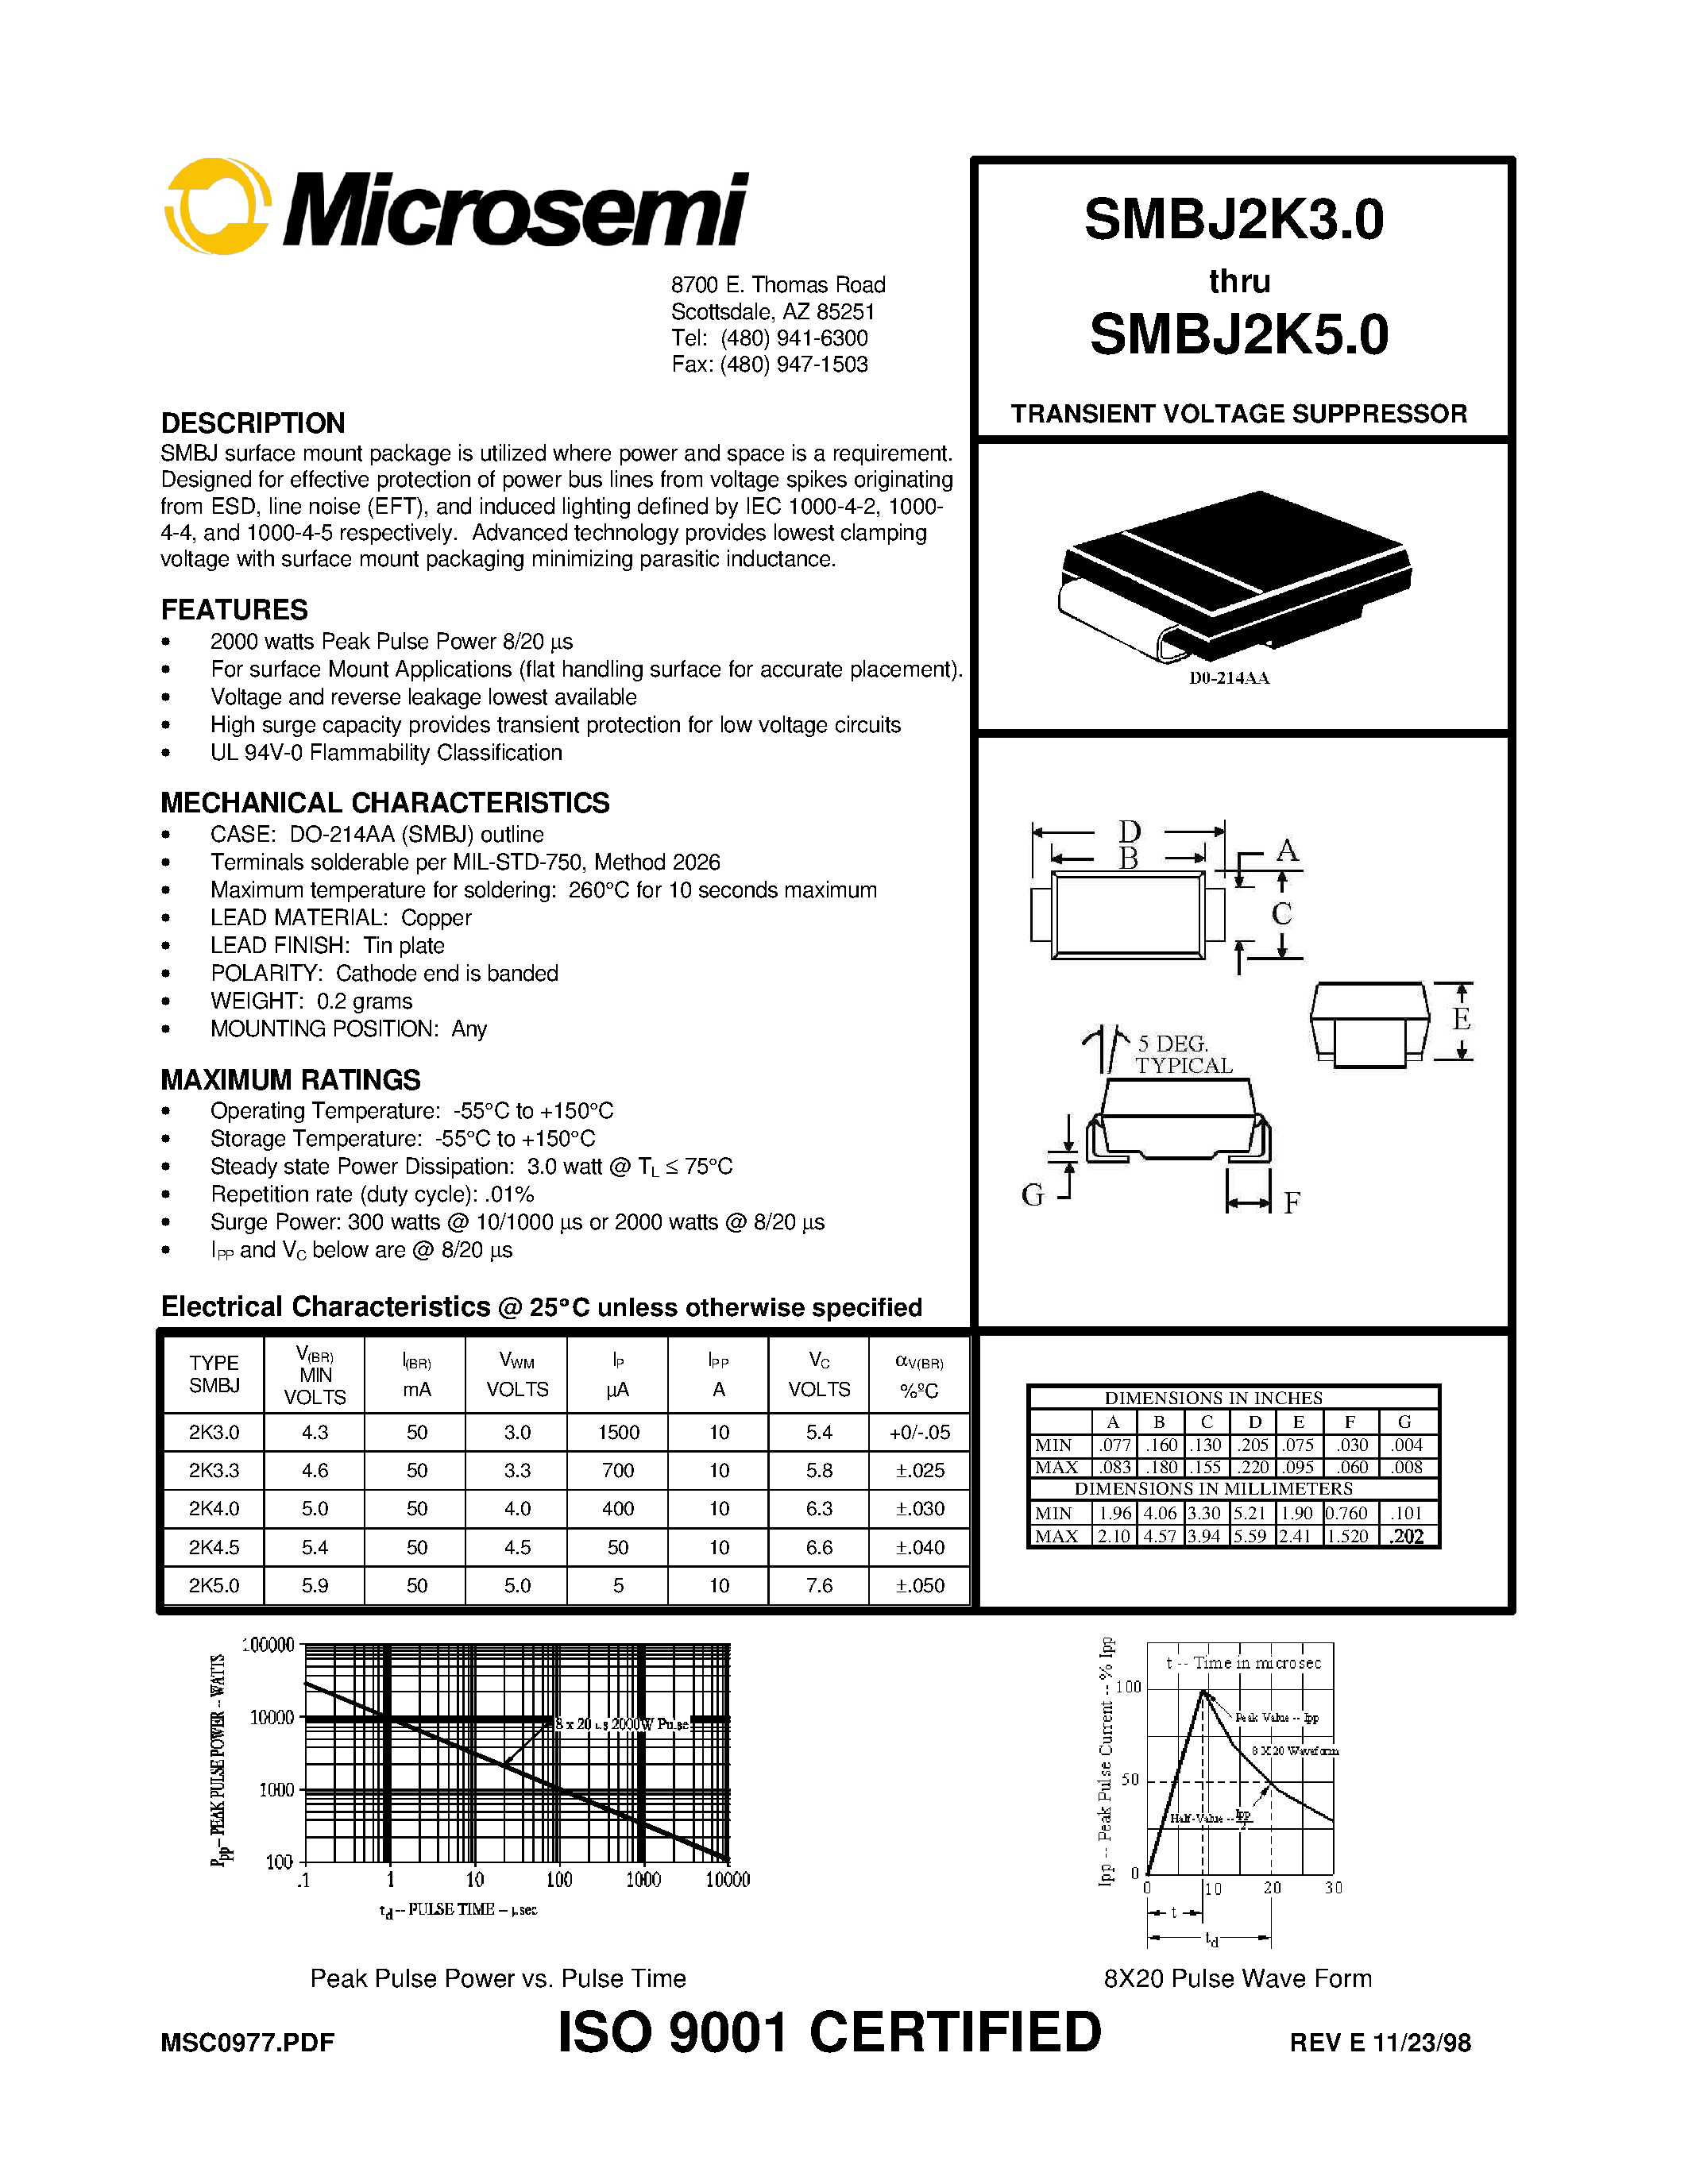 Datasheet SMB2K33 - TRANSIENT VOLTAGE SUPPRESSOR page 1